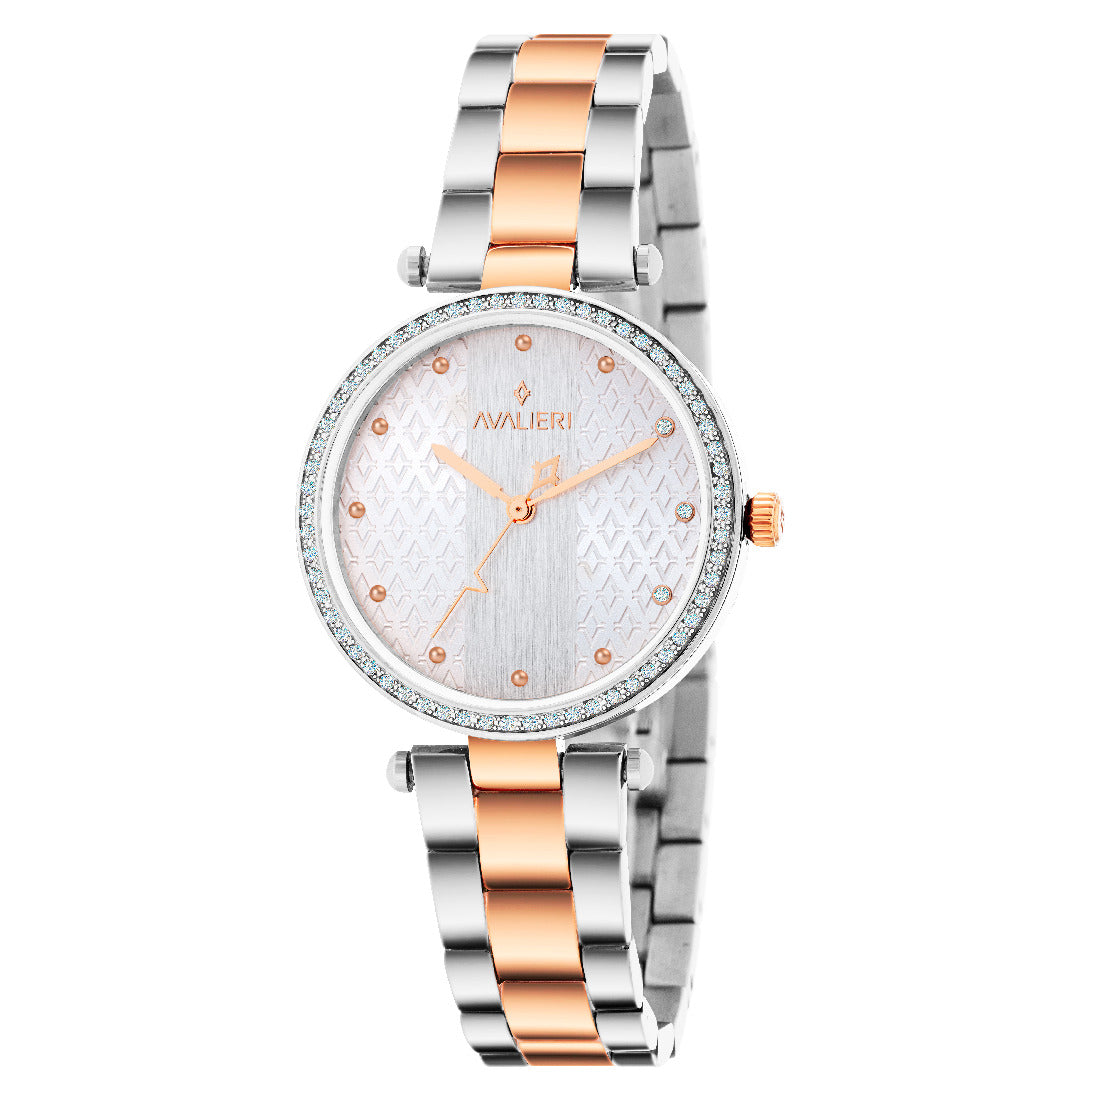 Avalieri Women's Quartz Watch Silver Dial - AV-2448B